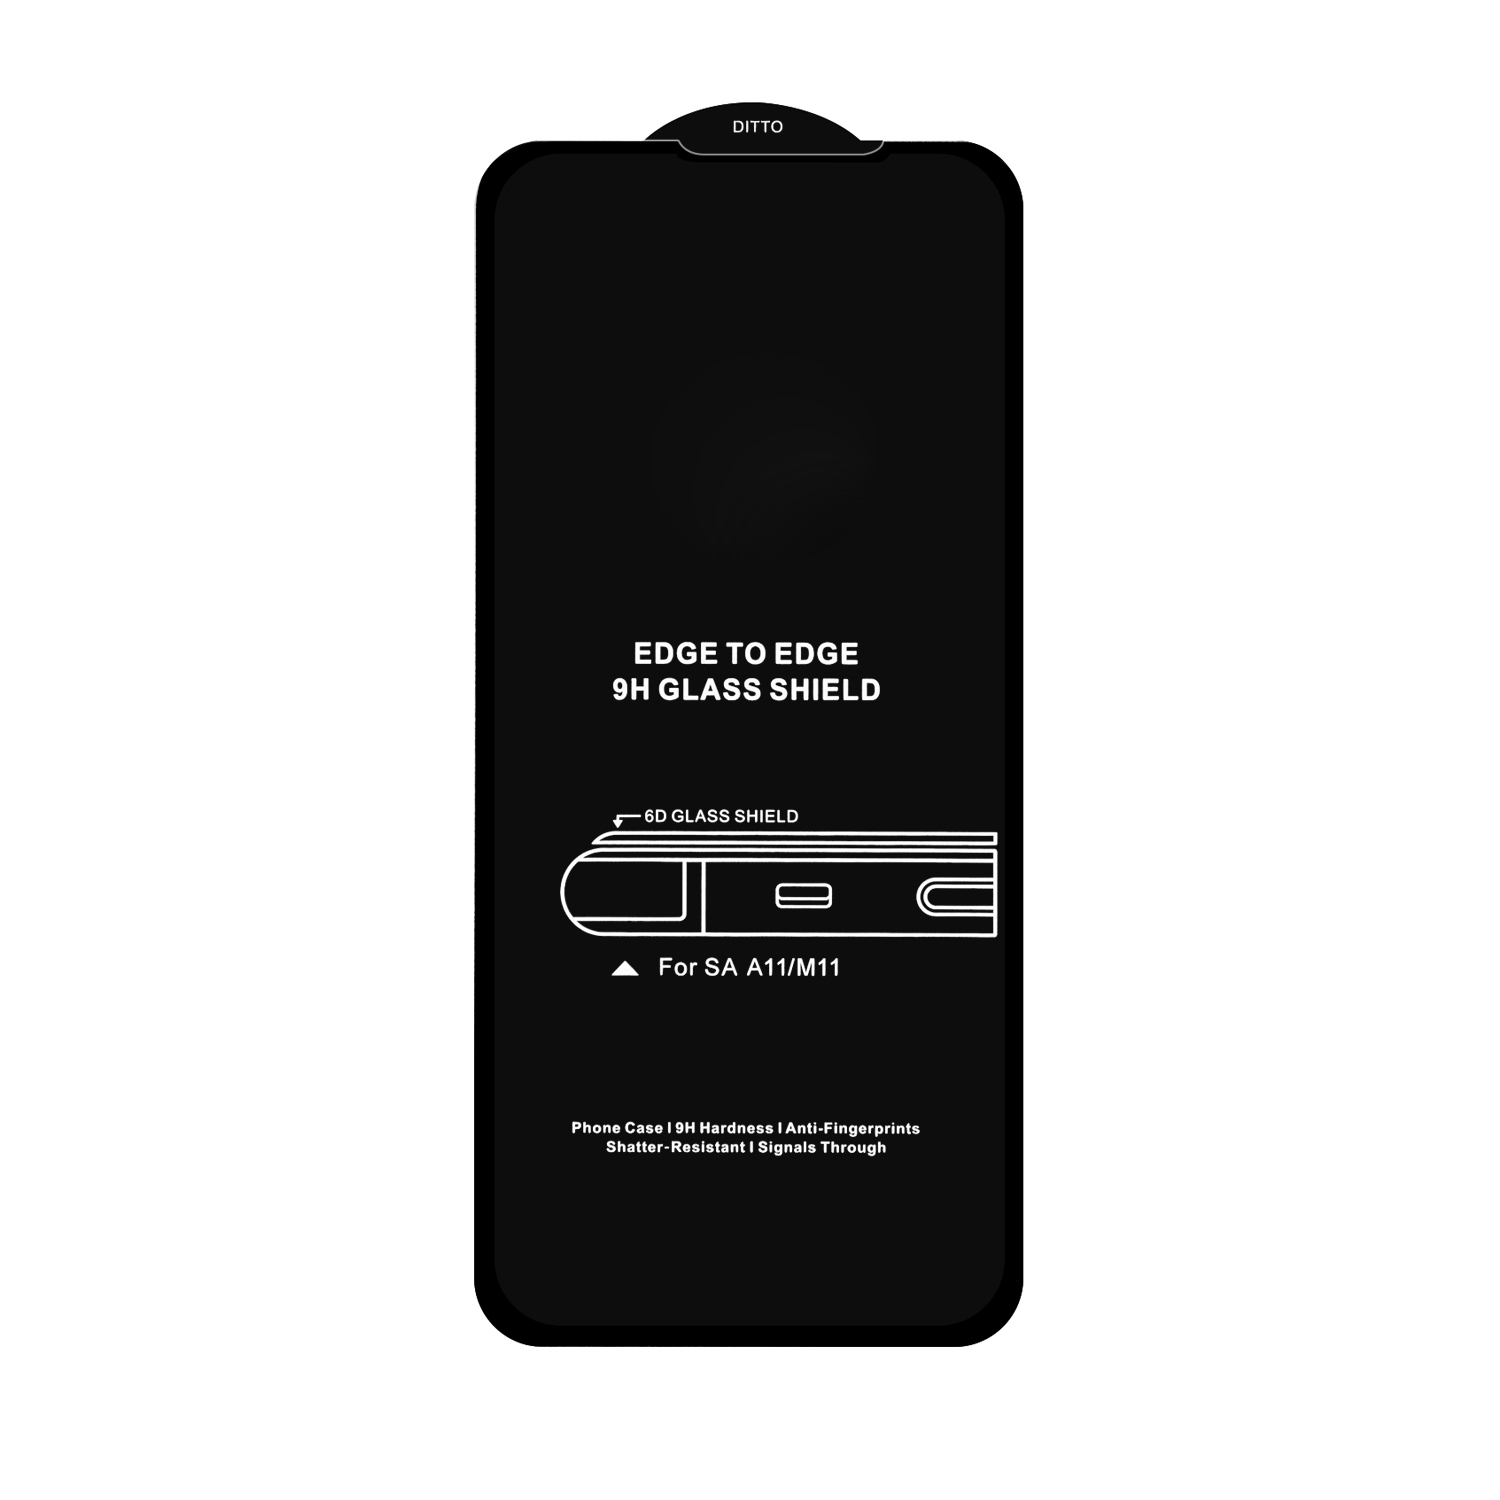 Защитное стекло Samsung A11/M11 Black 6D без упаковки